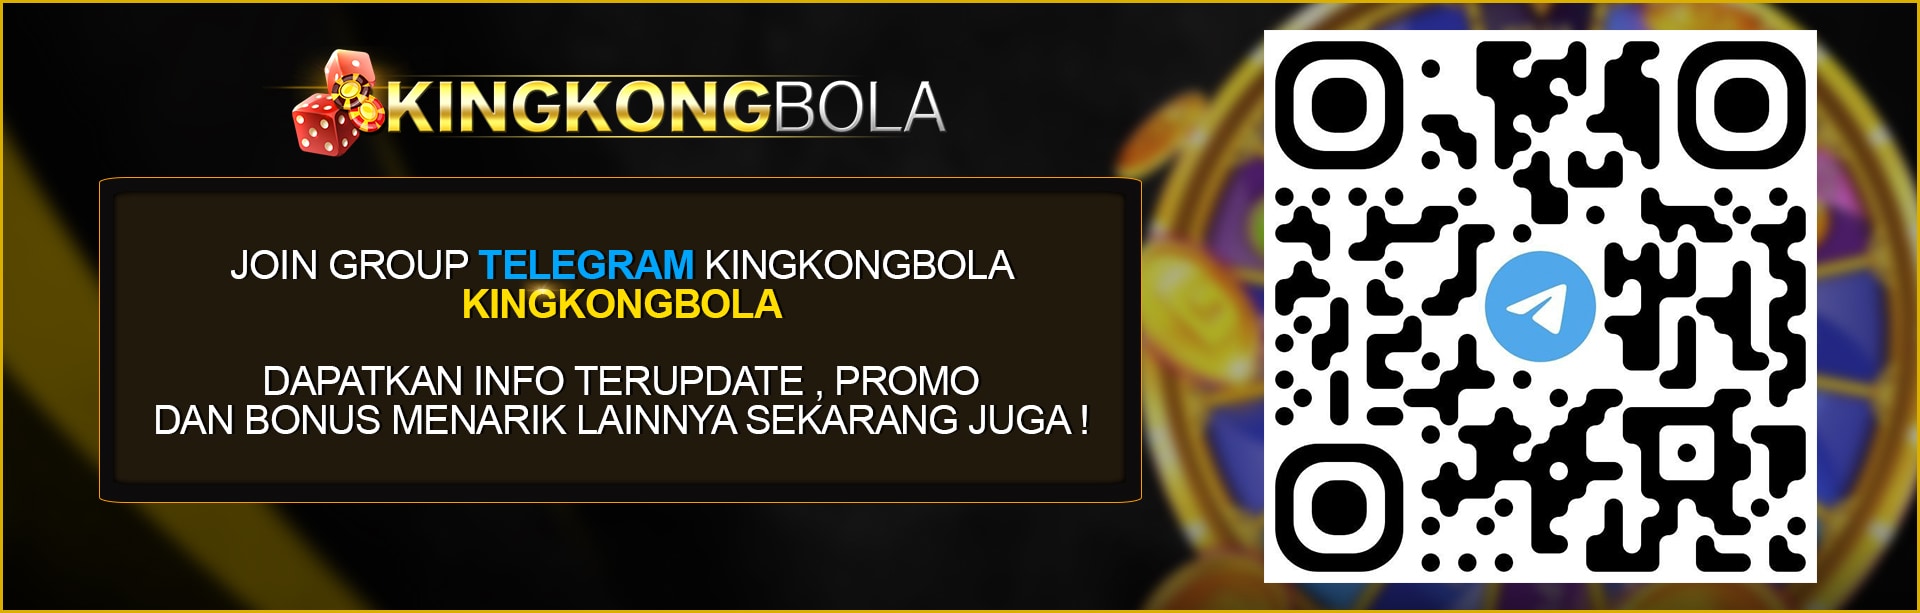 Join Group Telegram Kingkongbola